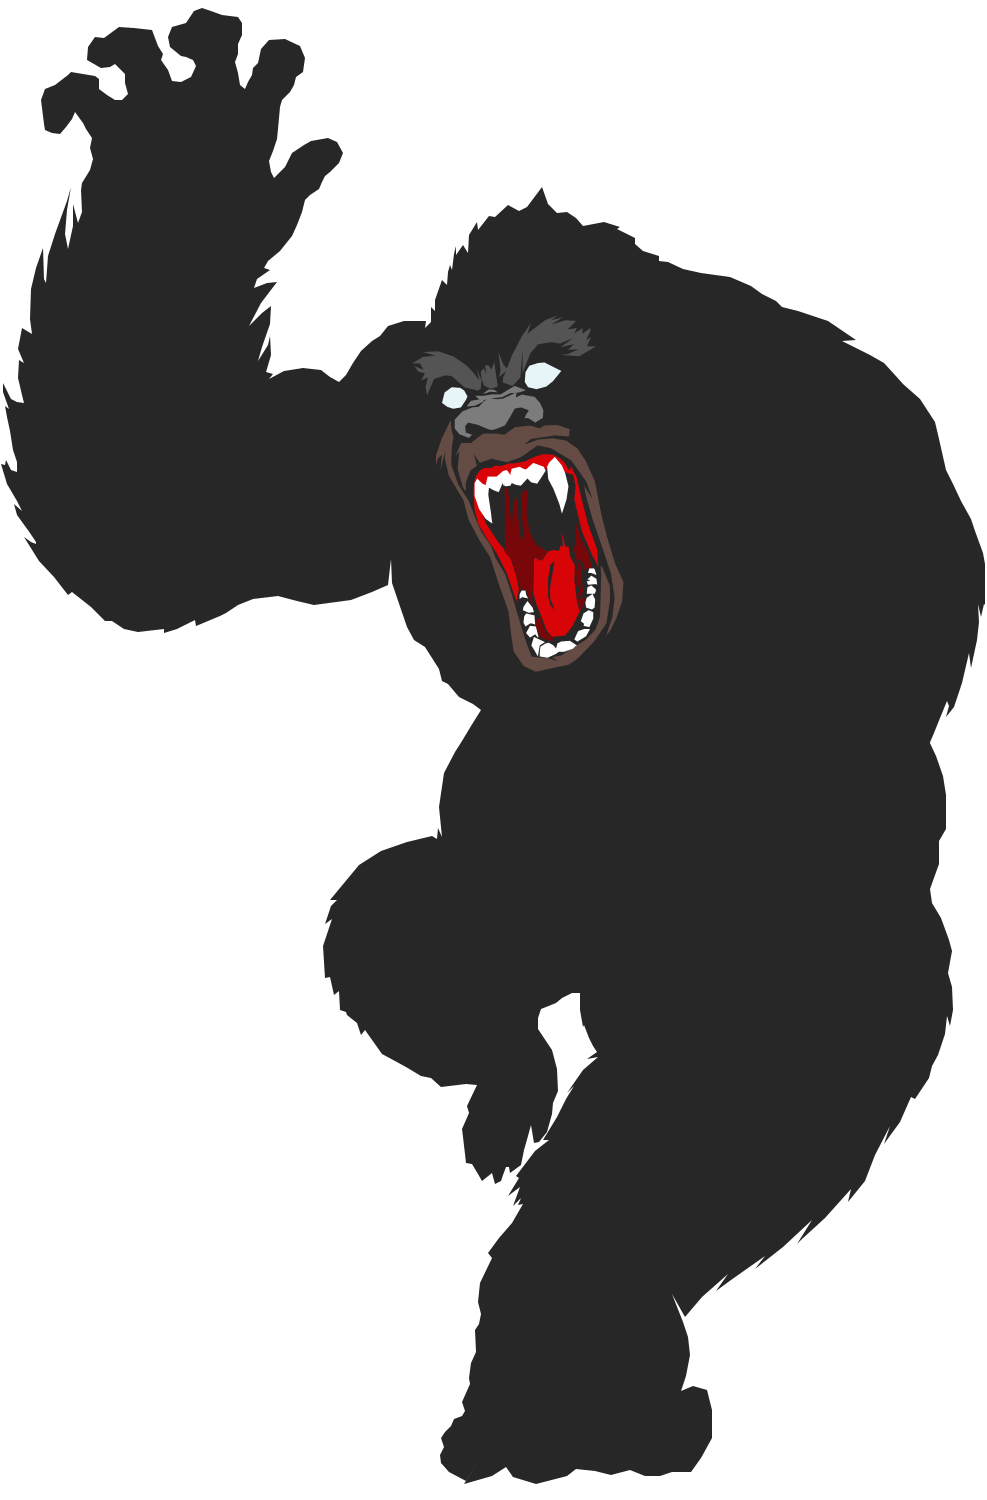 Gorilla King Kong Ape Primate - gorilla vector png download - 987*1500 ...